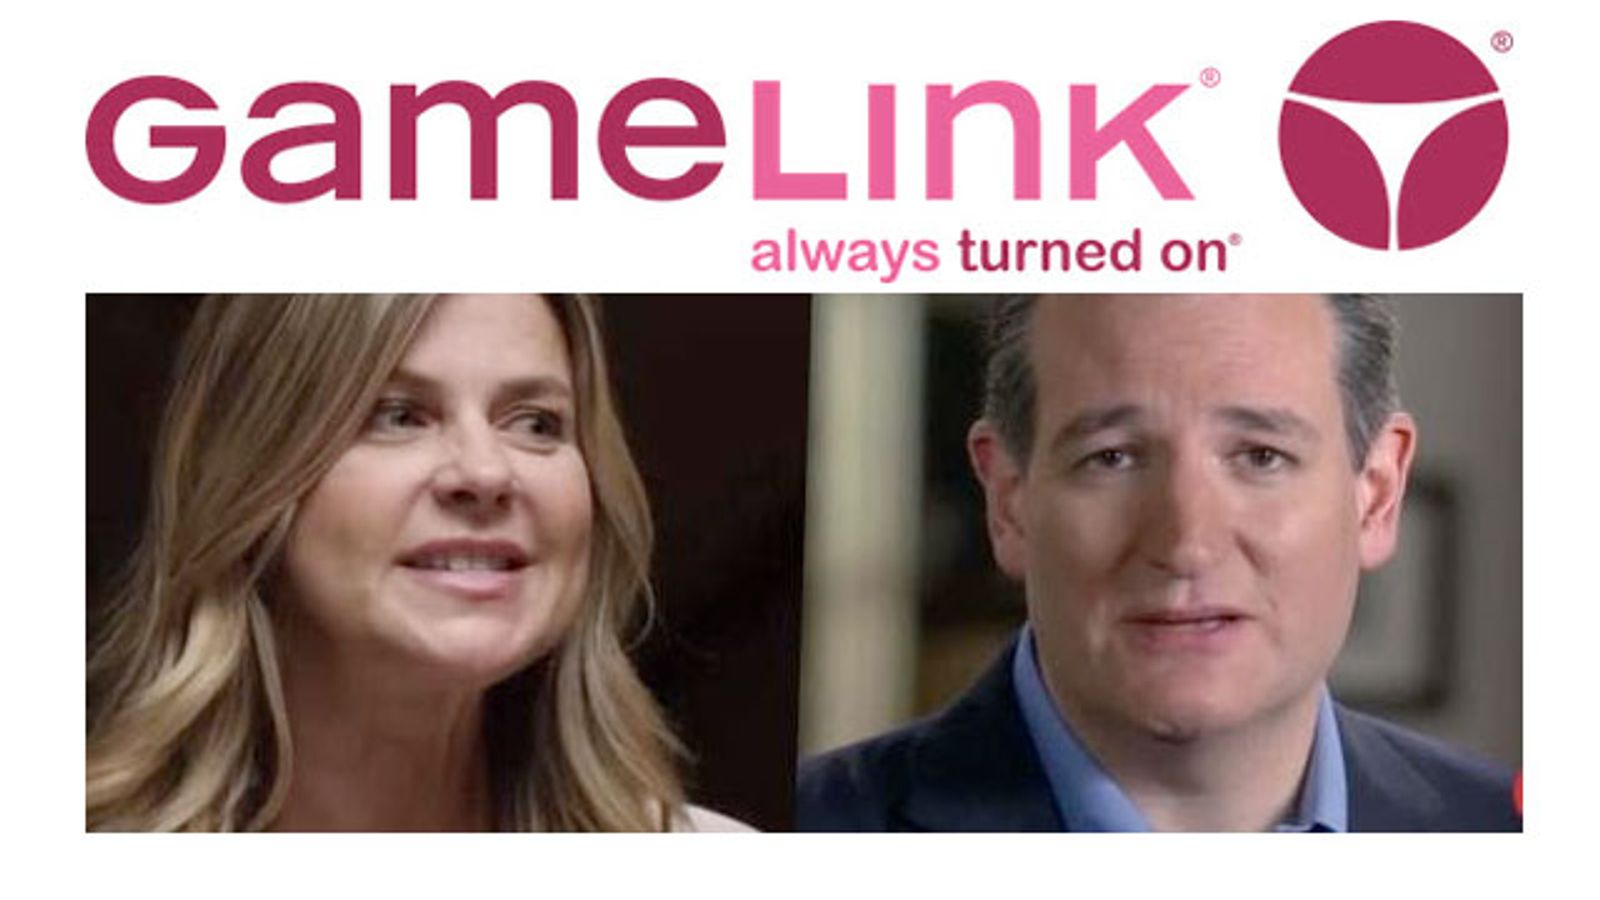 Gamelink.com Floats Offer for $100K Ad Series to Cruz Campaign